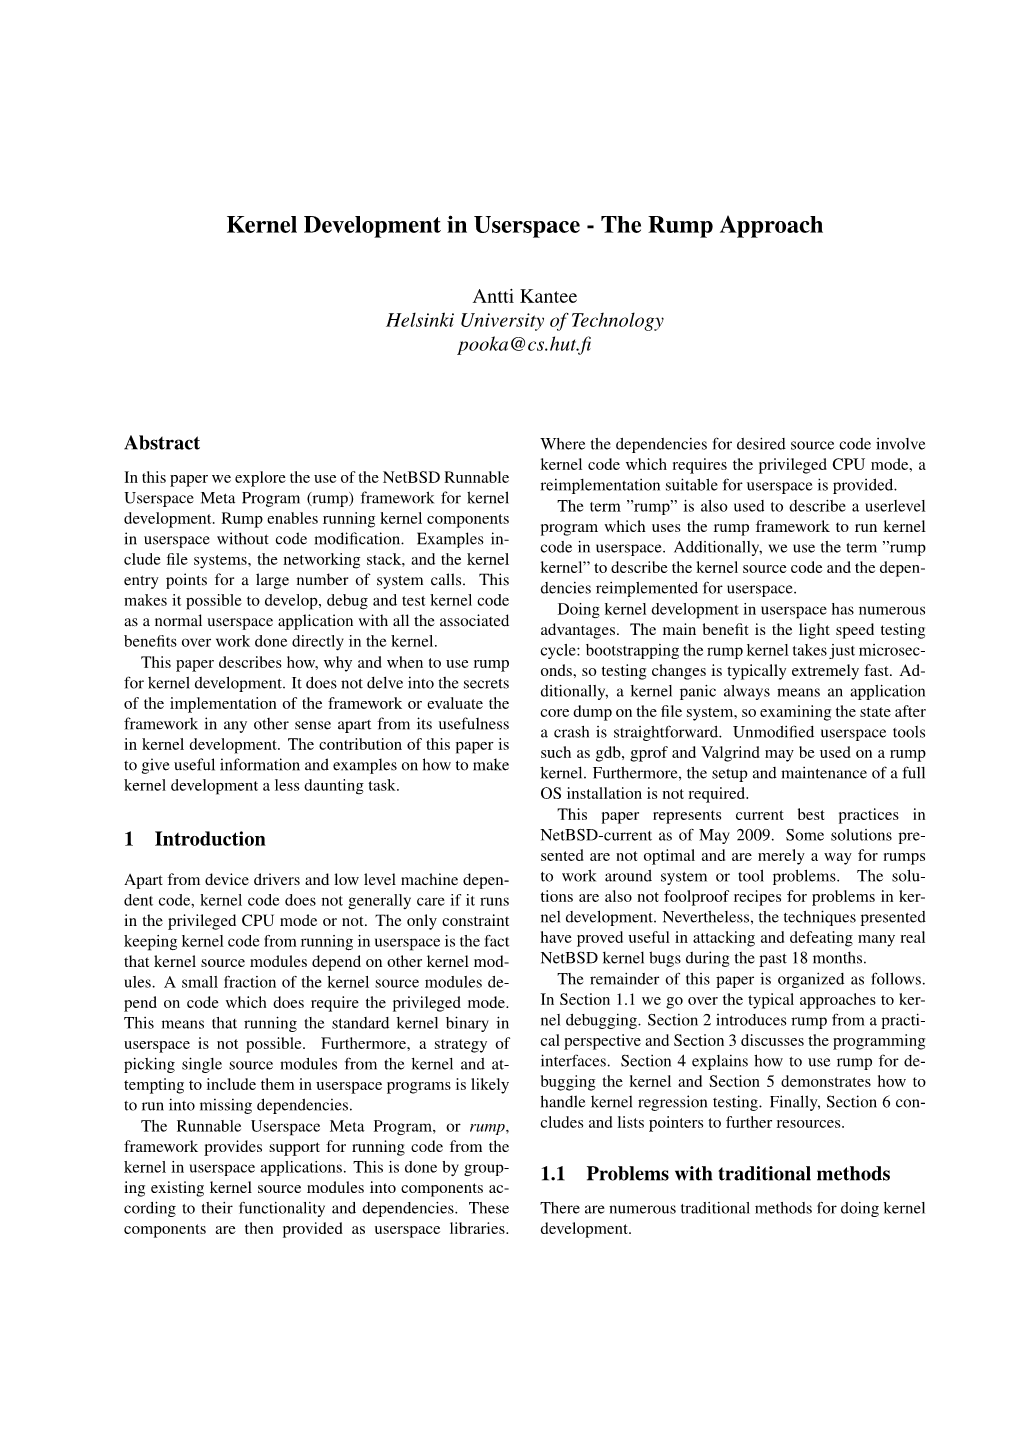 Kernel Development in Userspace - the Rump Approach